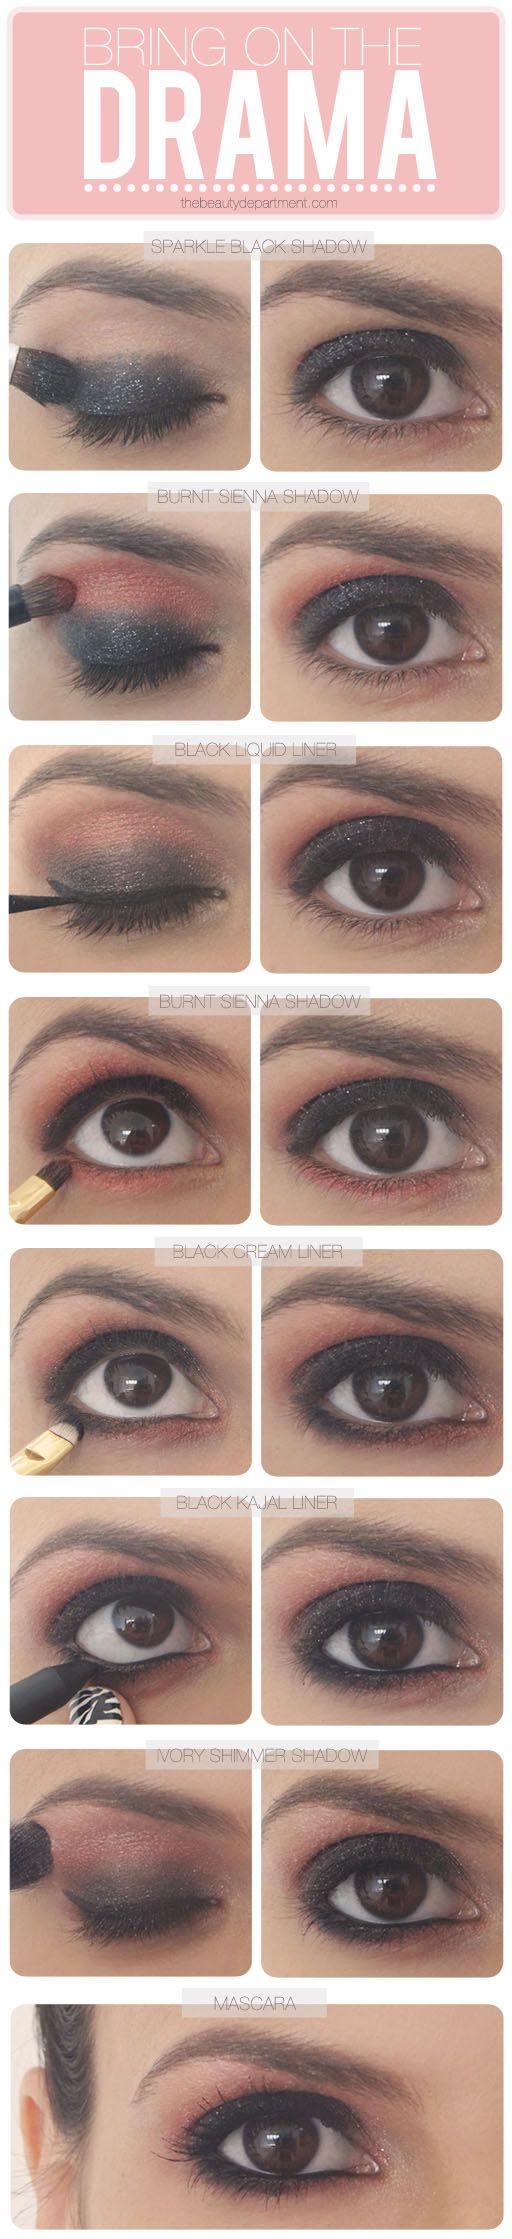 best eye makeup tutorials